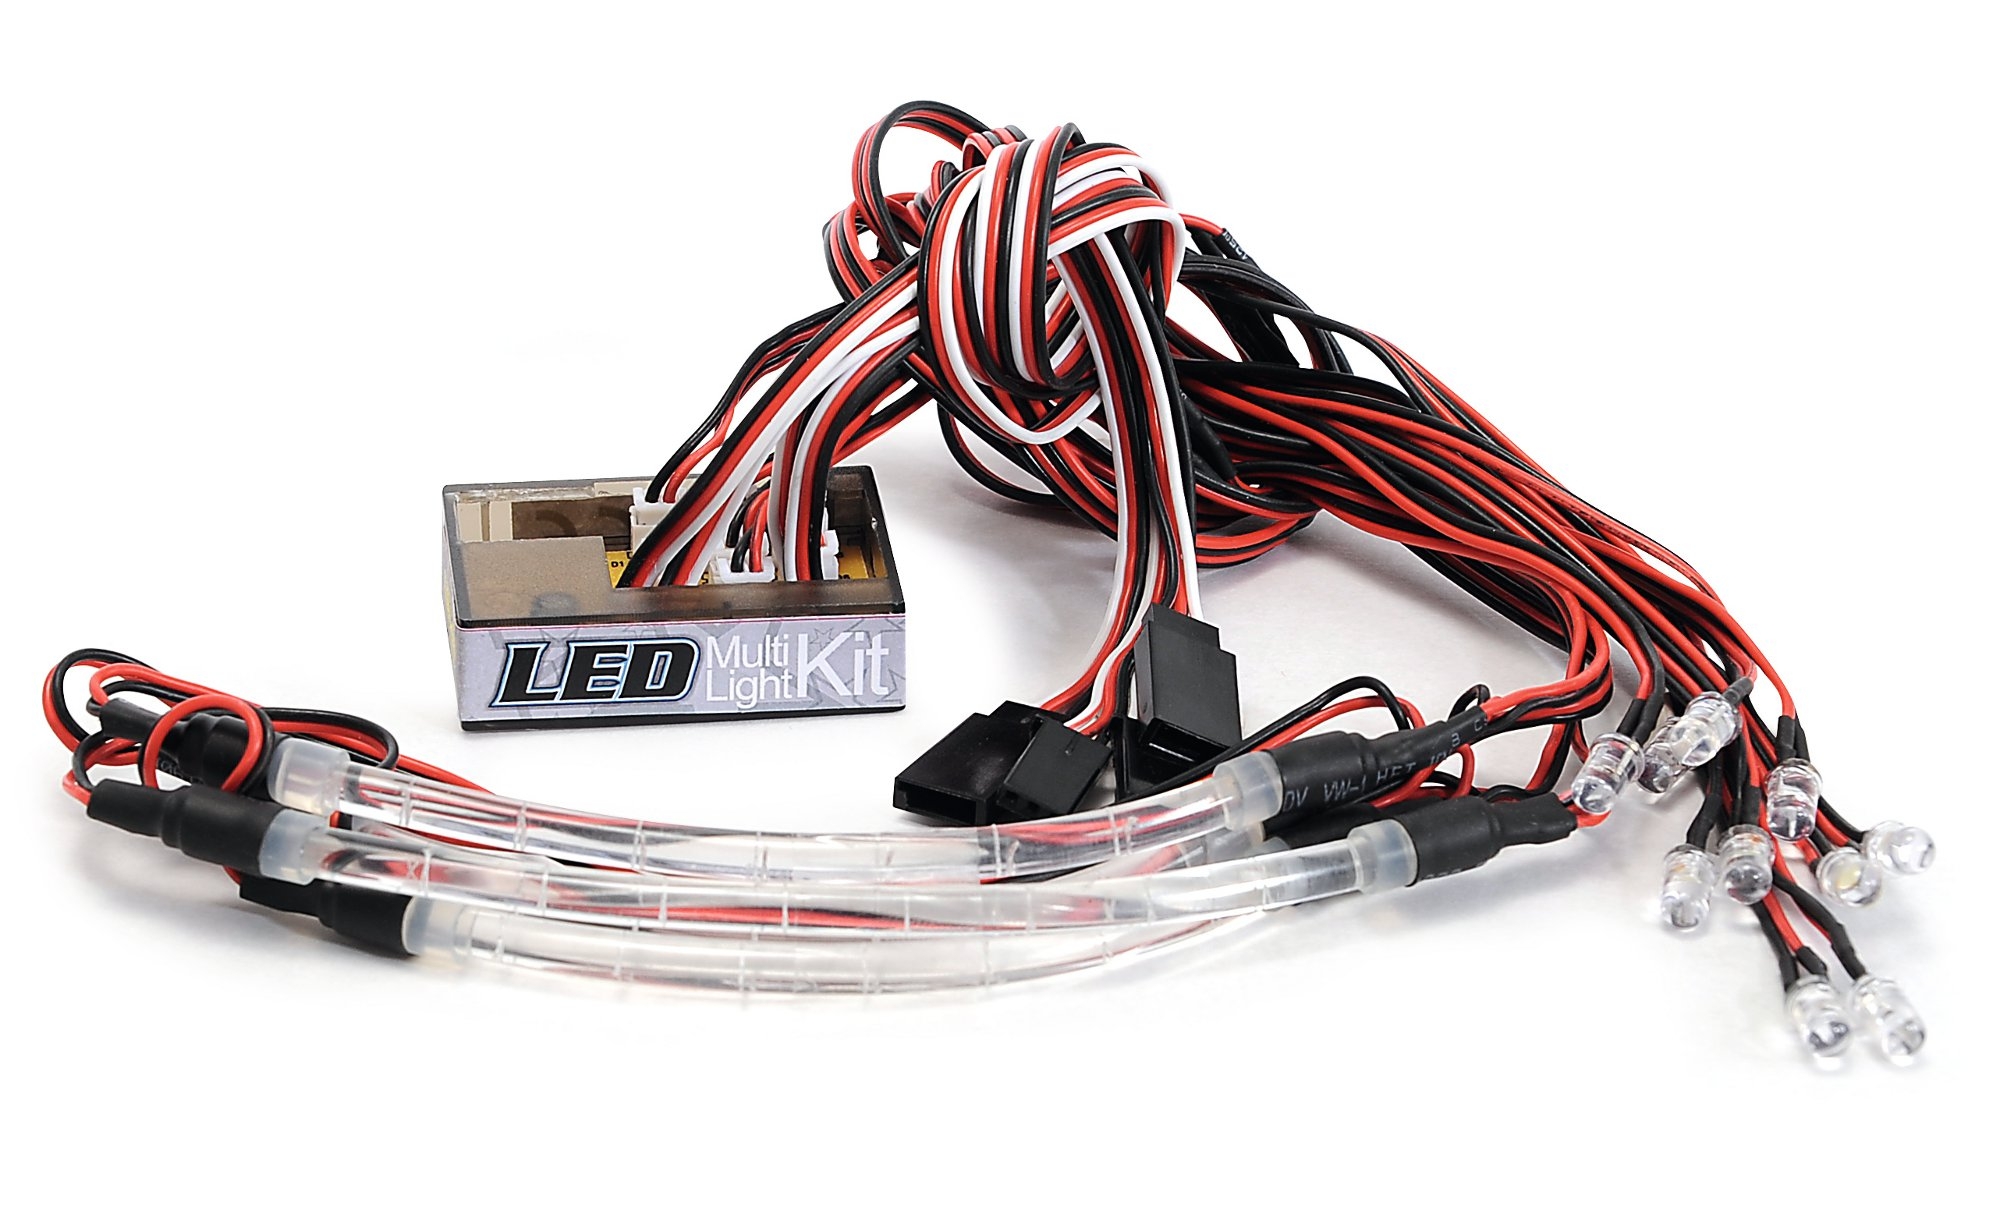 Kayhobbies - Onlineshop für RC Cars - Drift - Crawler - Licht Set SMD LED  (6 rote LEDS)